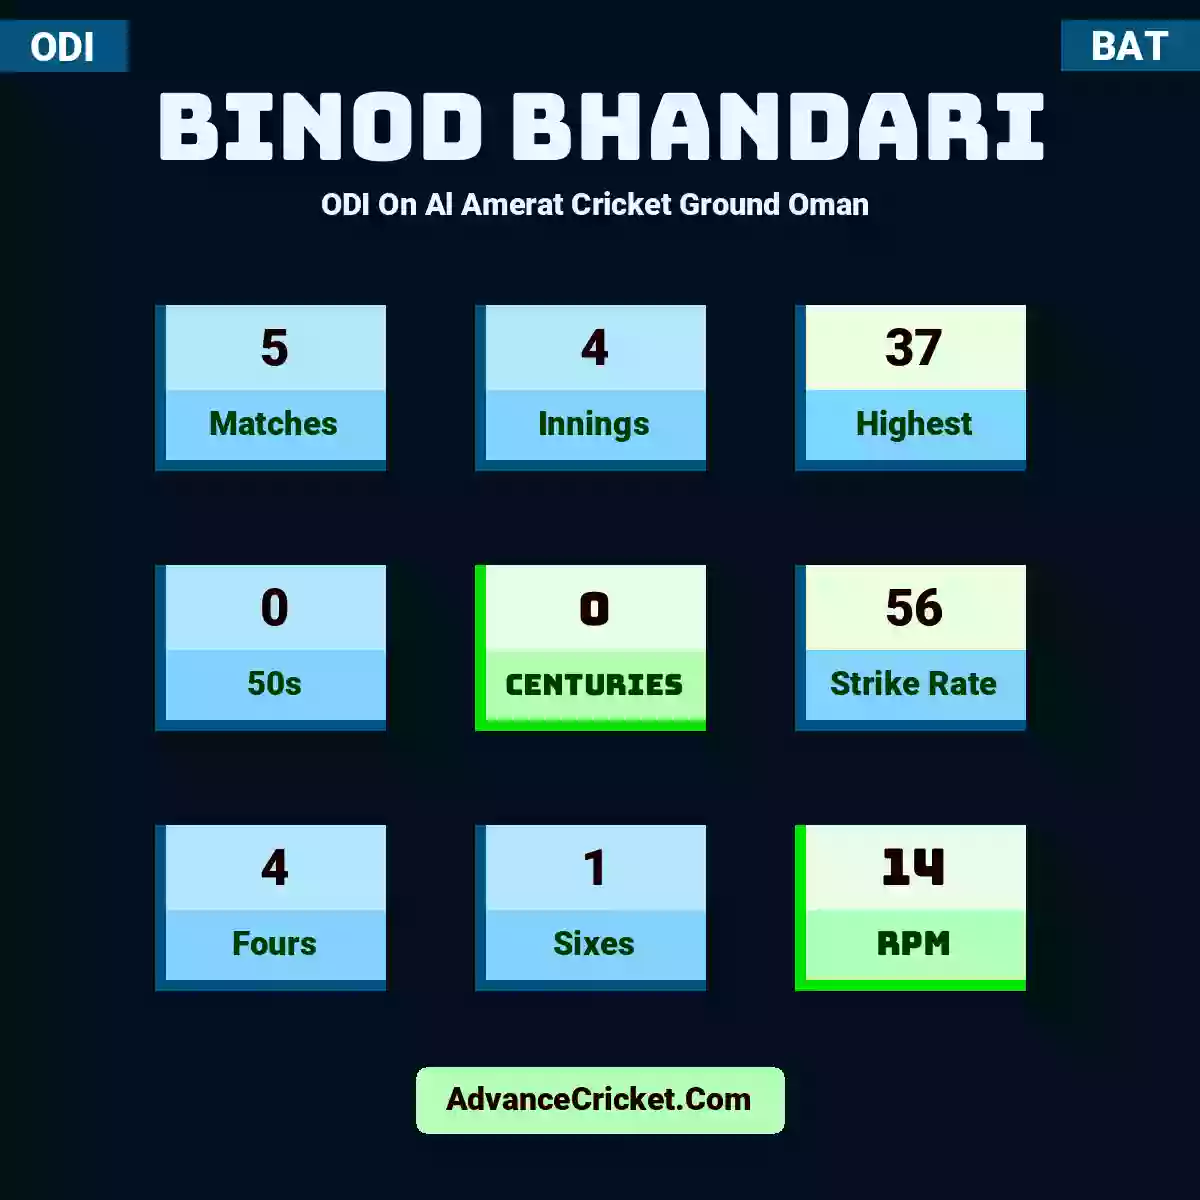 Binod Bhandari ODI  On Al Amerat Cricket Ground Oman , Binod Bhandari played 5 matches, scored 37 runs as highest, 0 half-centuries, and 0 centuries, with a strike rate of 56. B.Bhandari hit 4 fours and 1 sixes, with an RPM of 14.